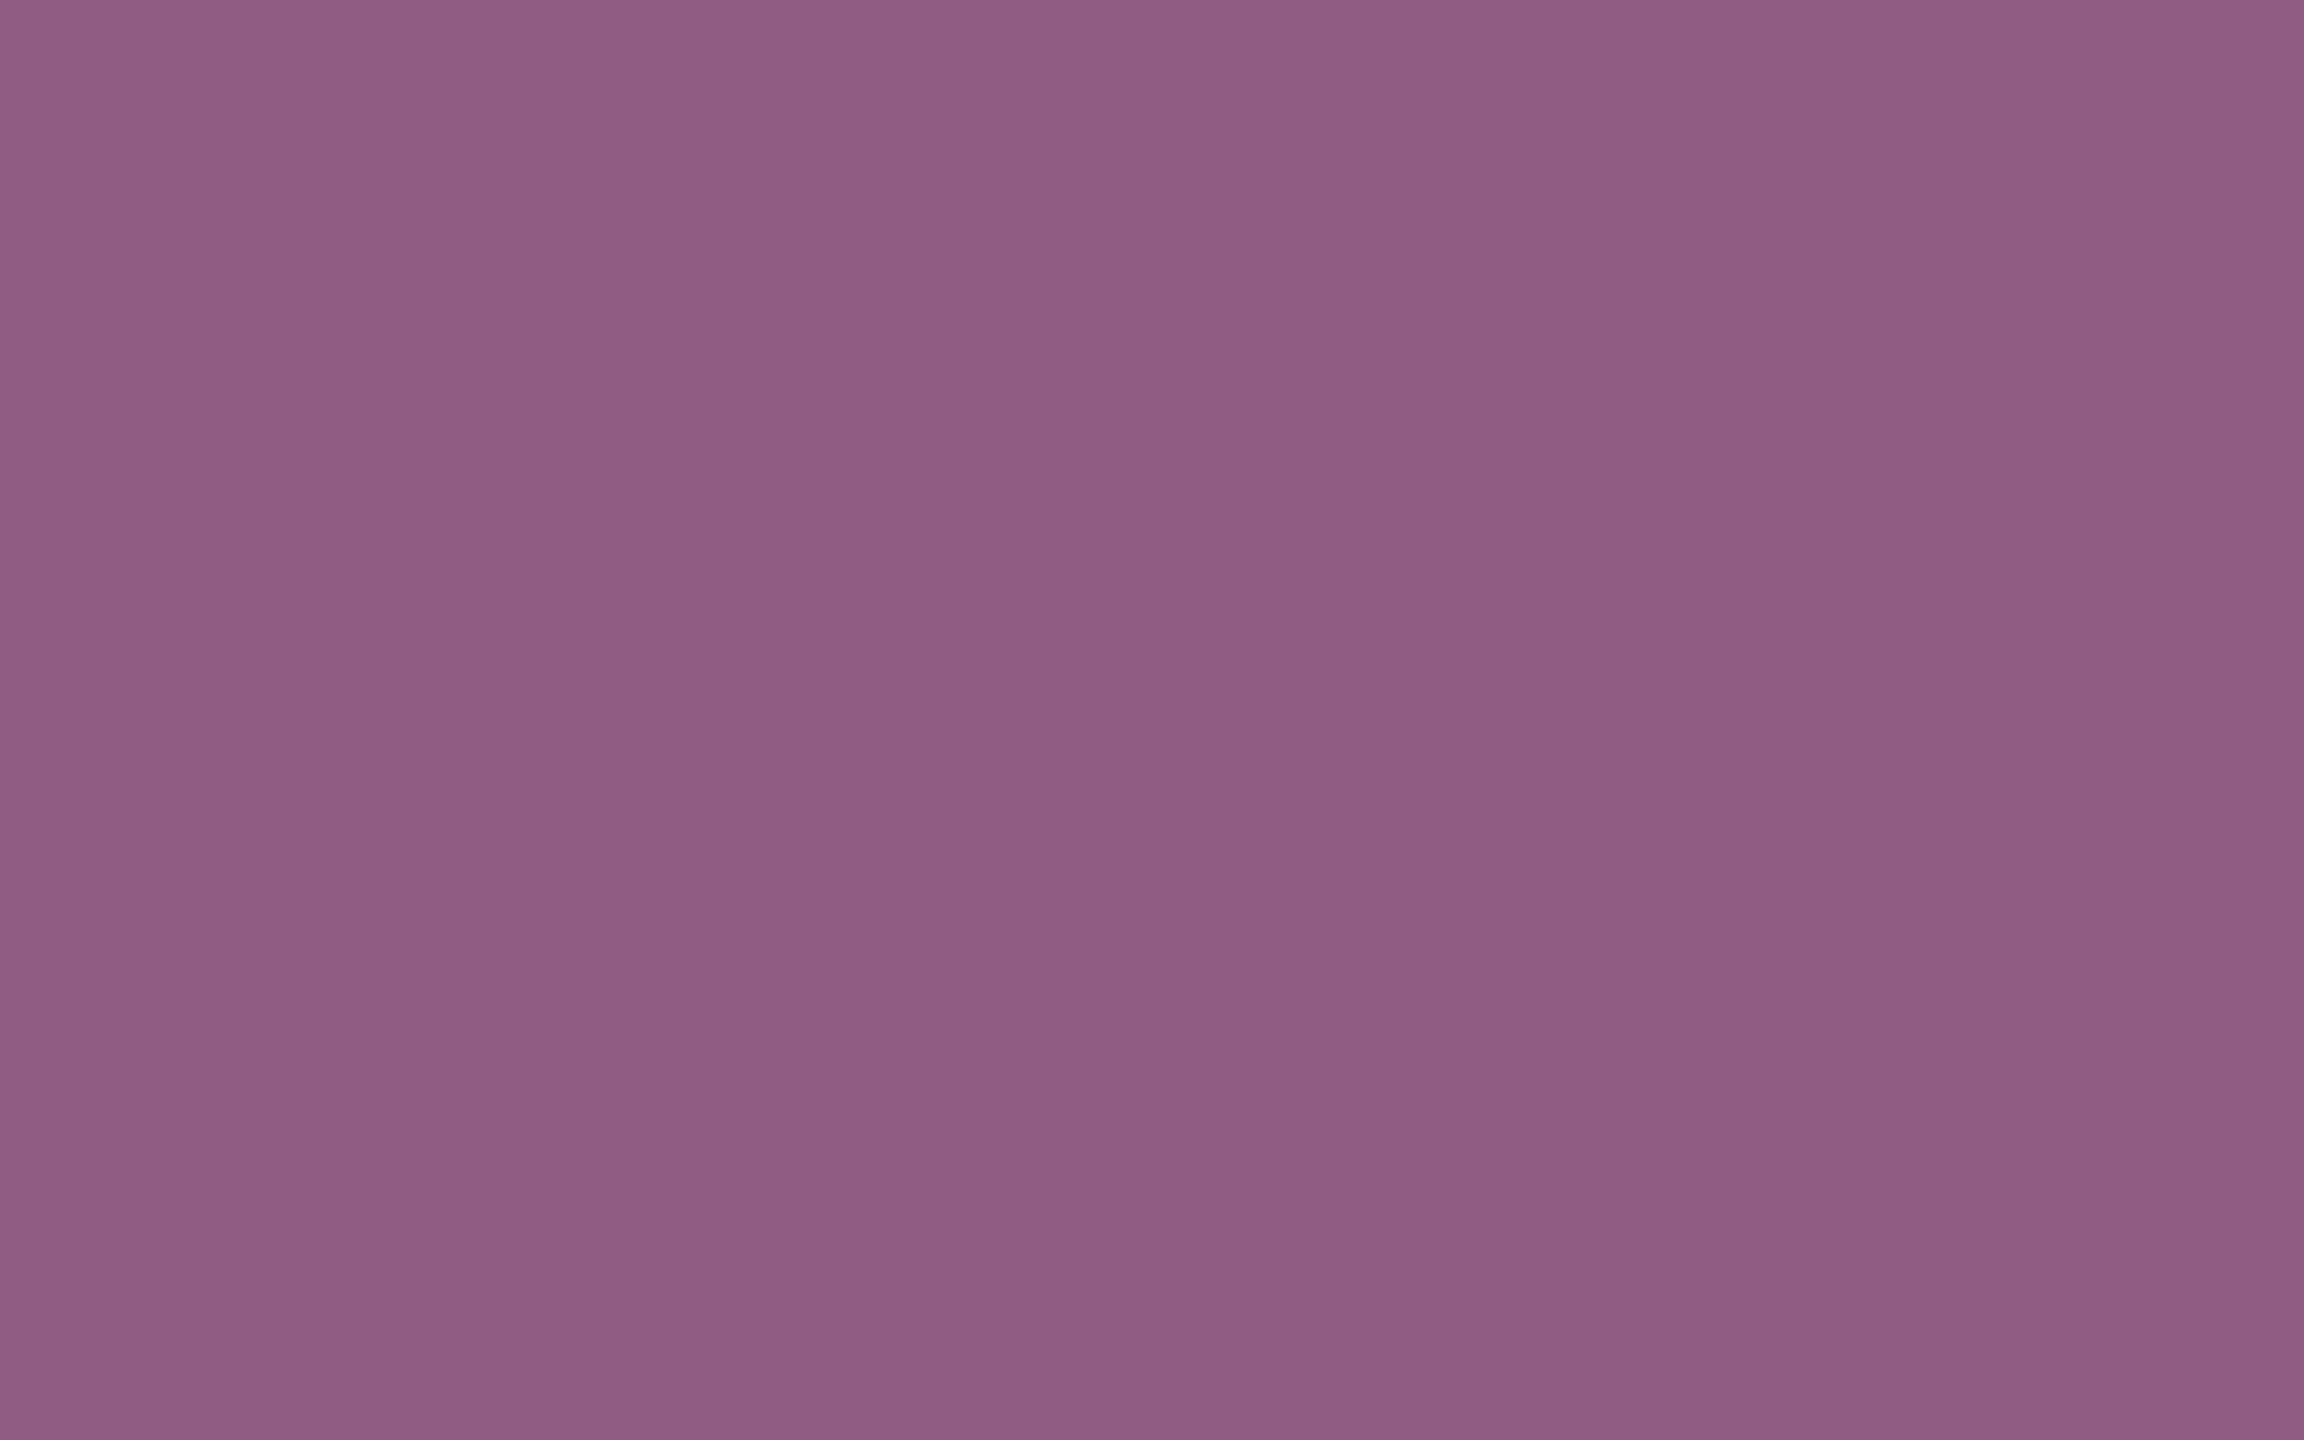 2304x1440 Antique Fuchsia Solid Color Background